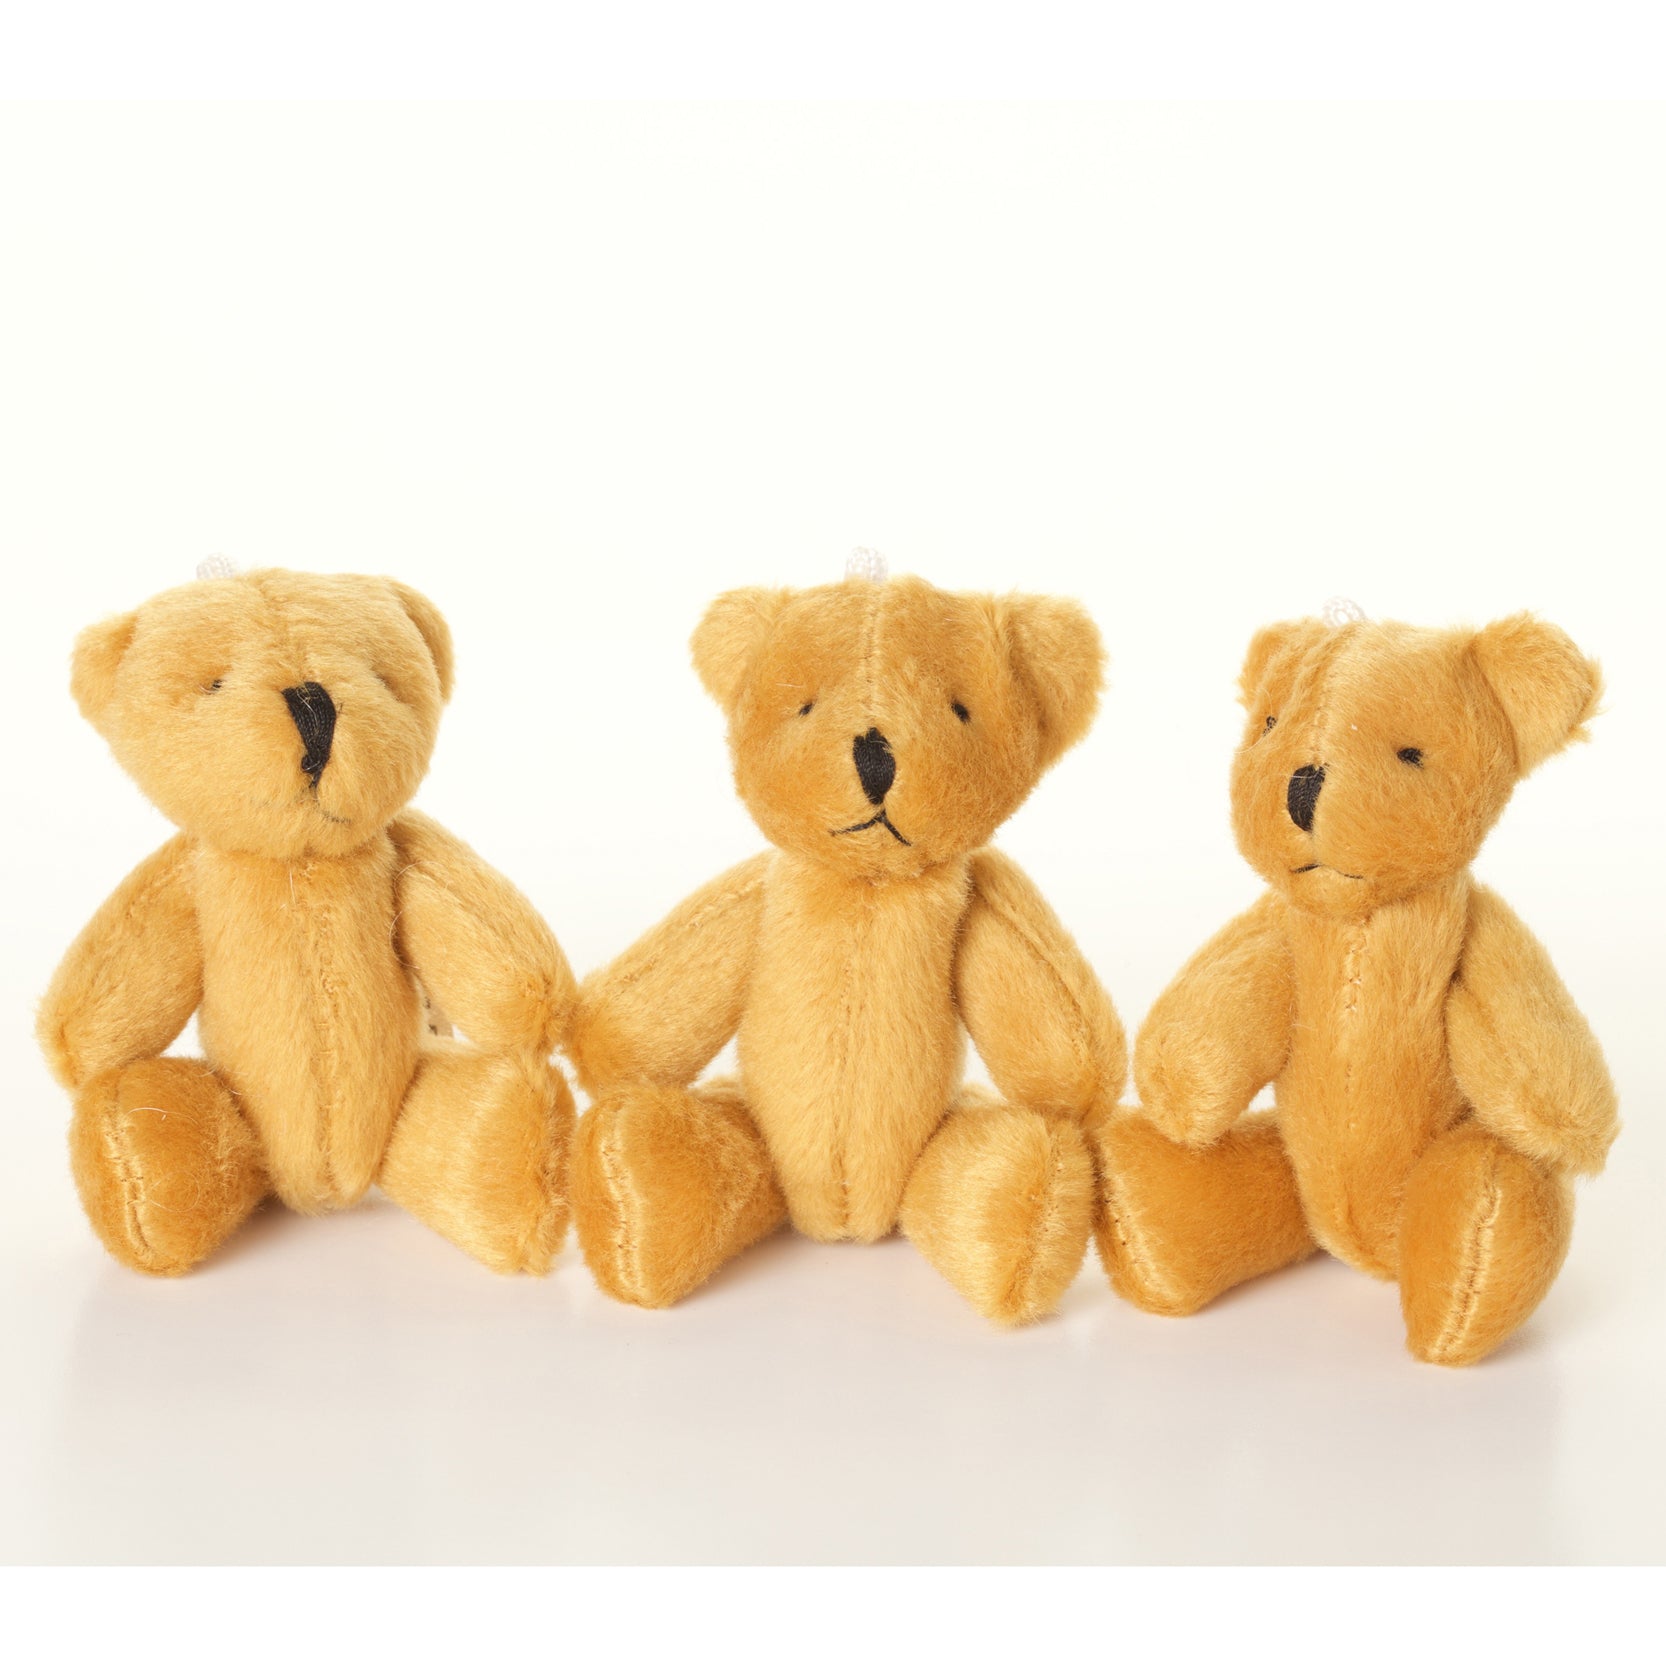 Small BROWN Teddy Bears X 100 - Cute Soft Adorable